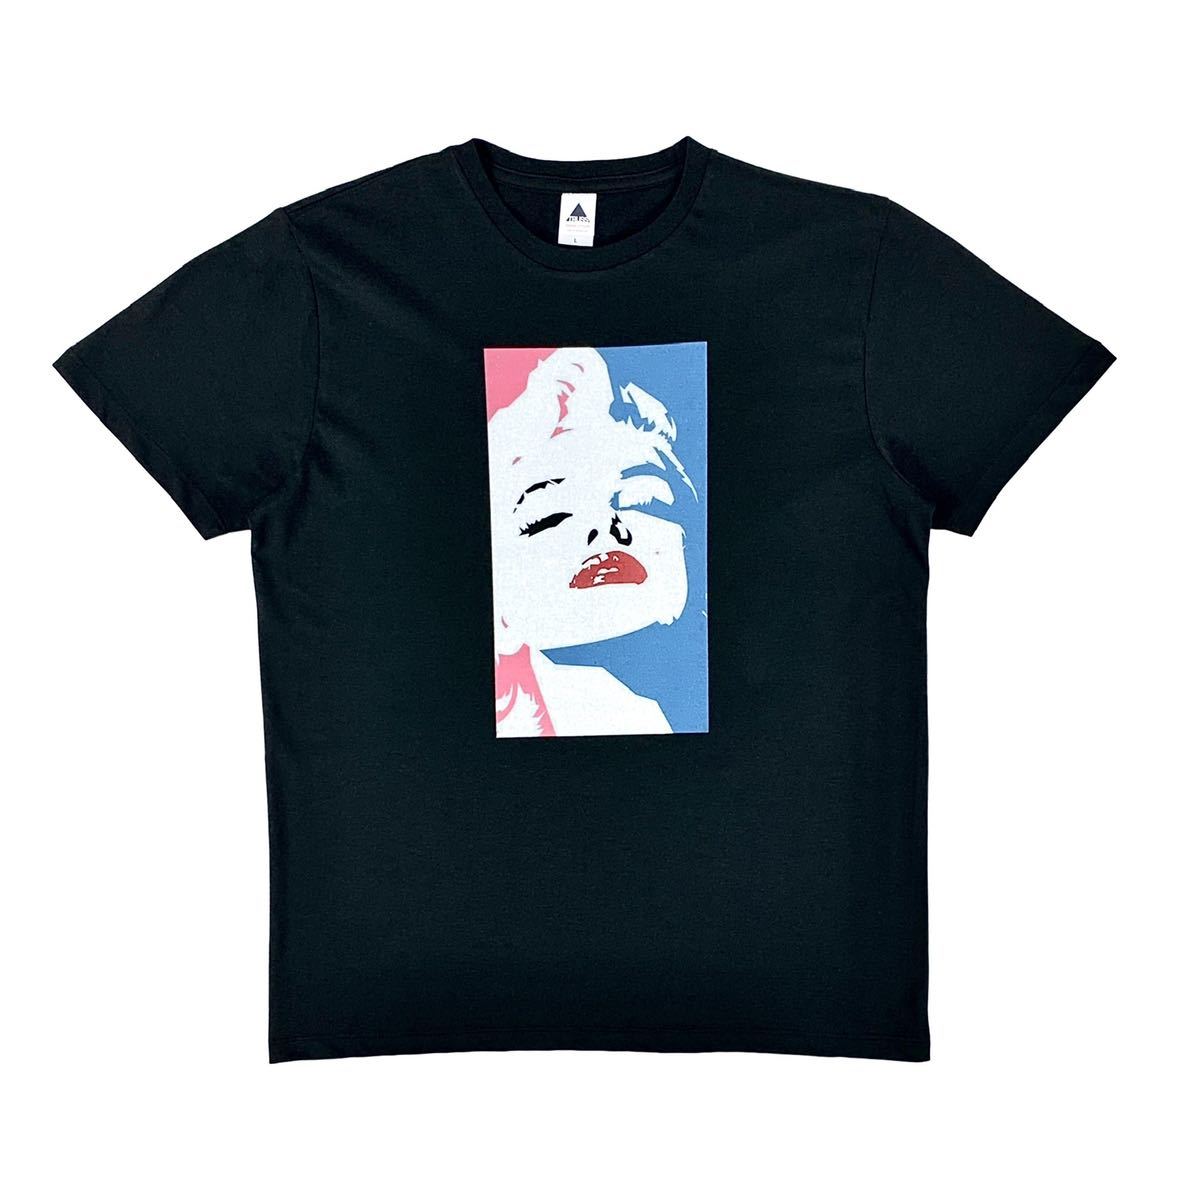  new goods Marilyn Monroe America Blond sex symbol pop art T-shirt S M L XL big oversize XXL~5XL long T Parker 